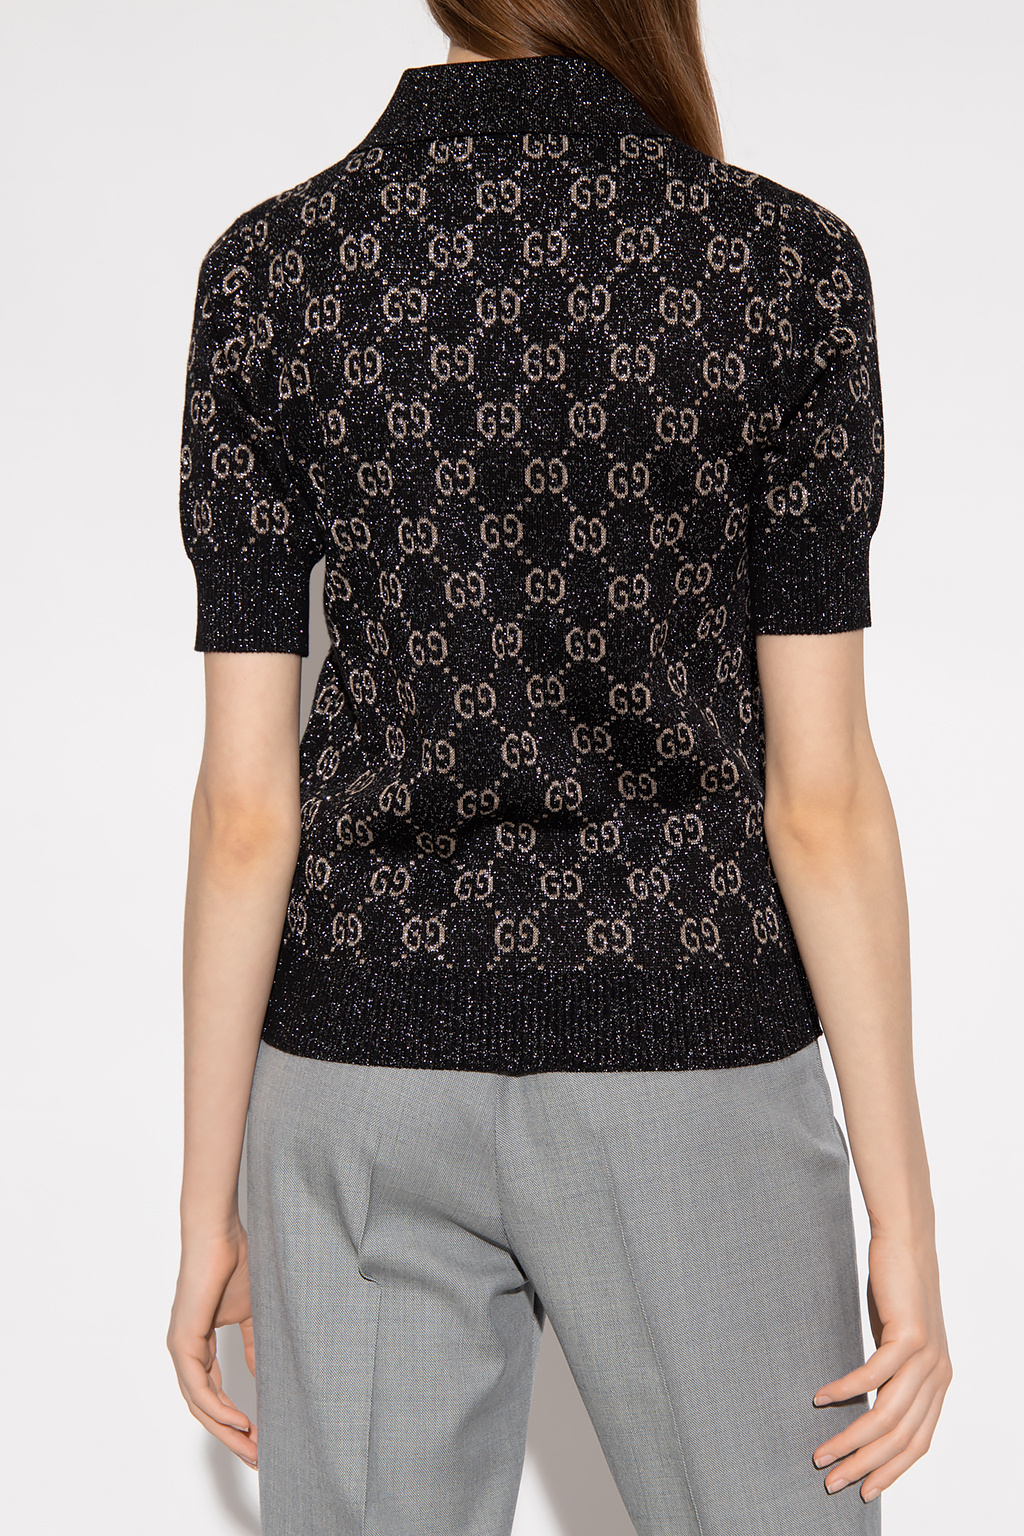 Louis Vuitton, Shirts, Louis Vuitton All Over Tweed Monogram Polo